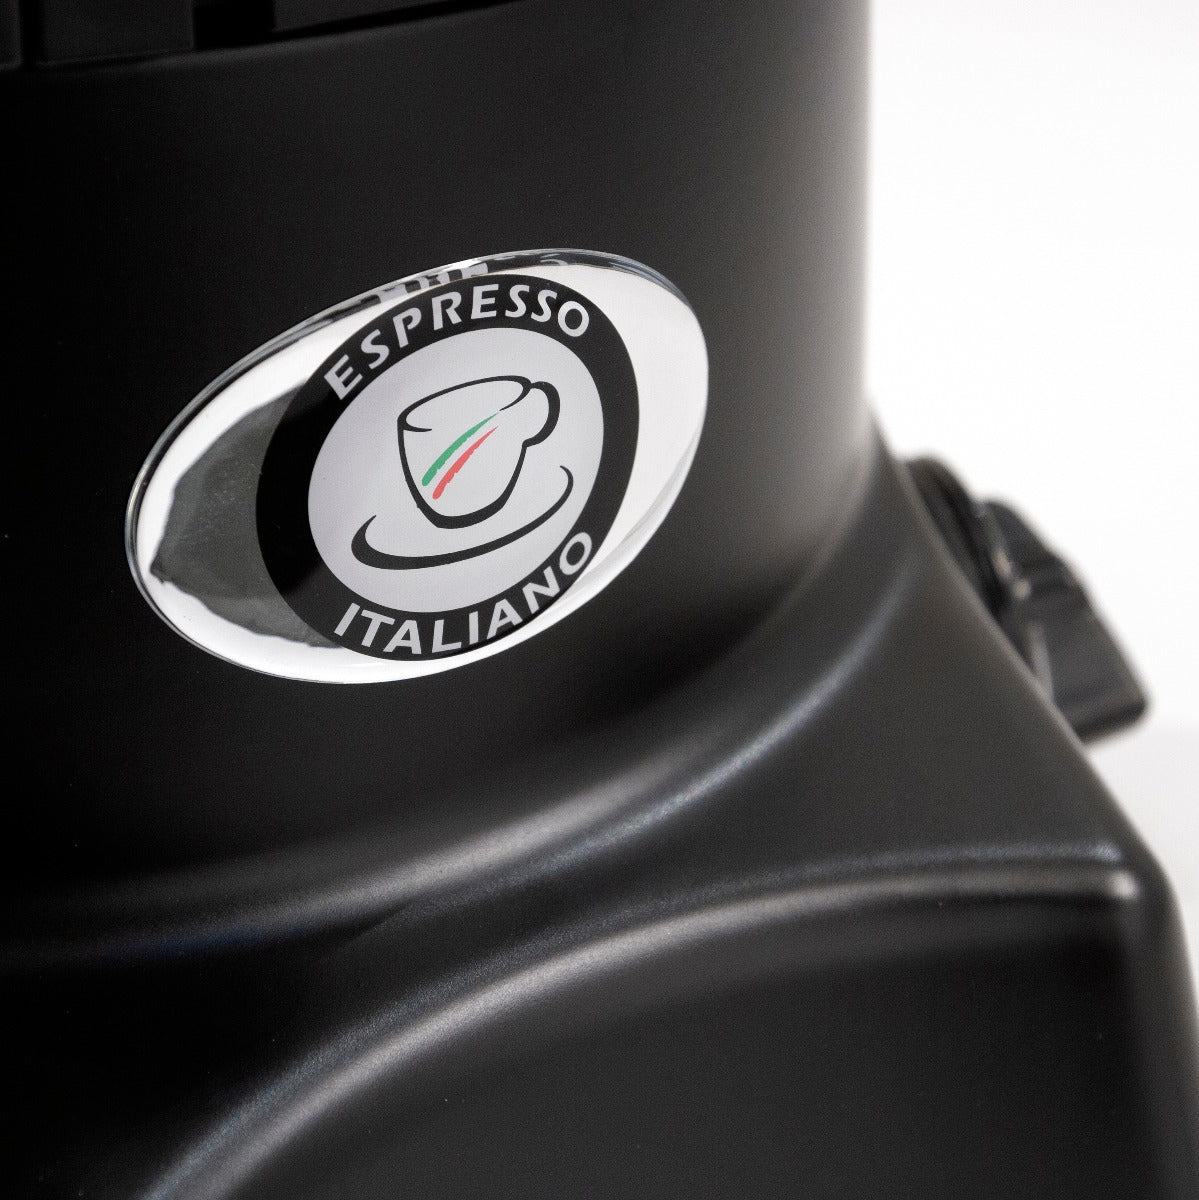 Espresso Italiano badge on the base